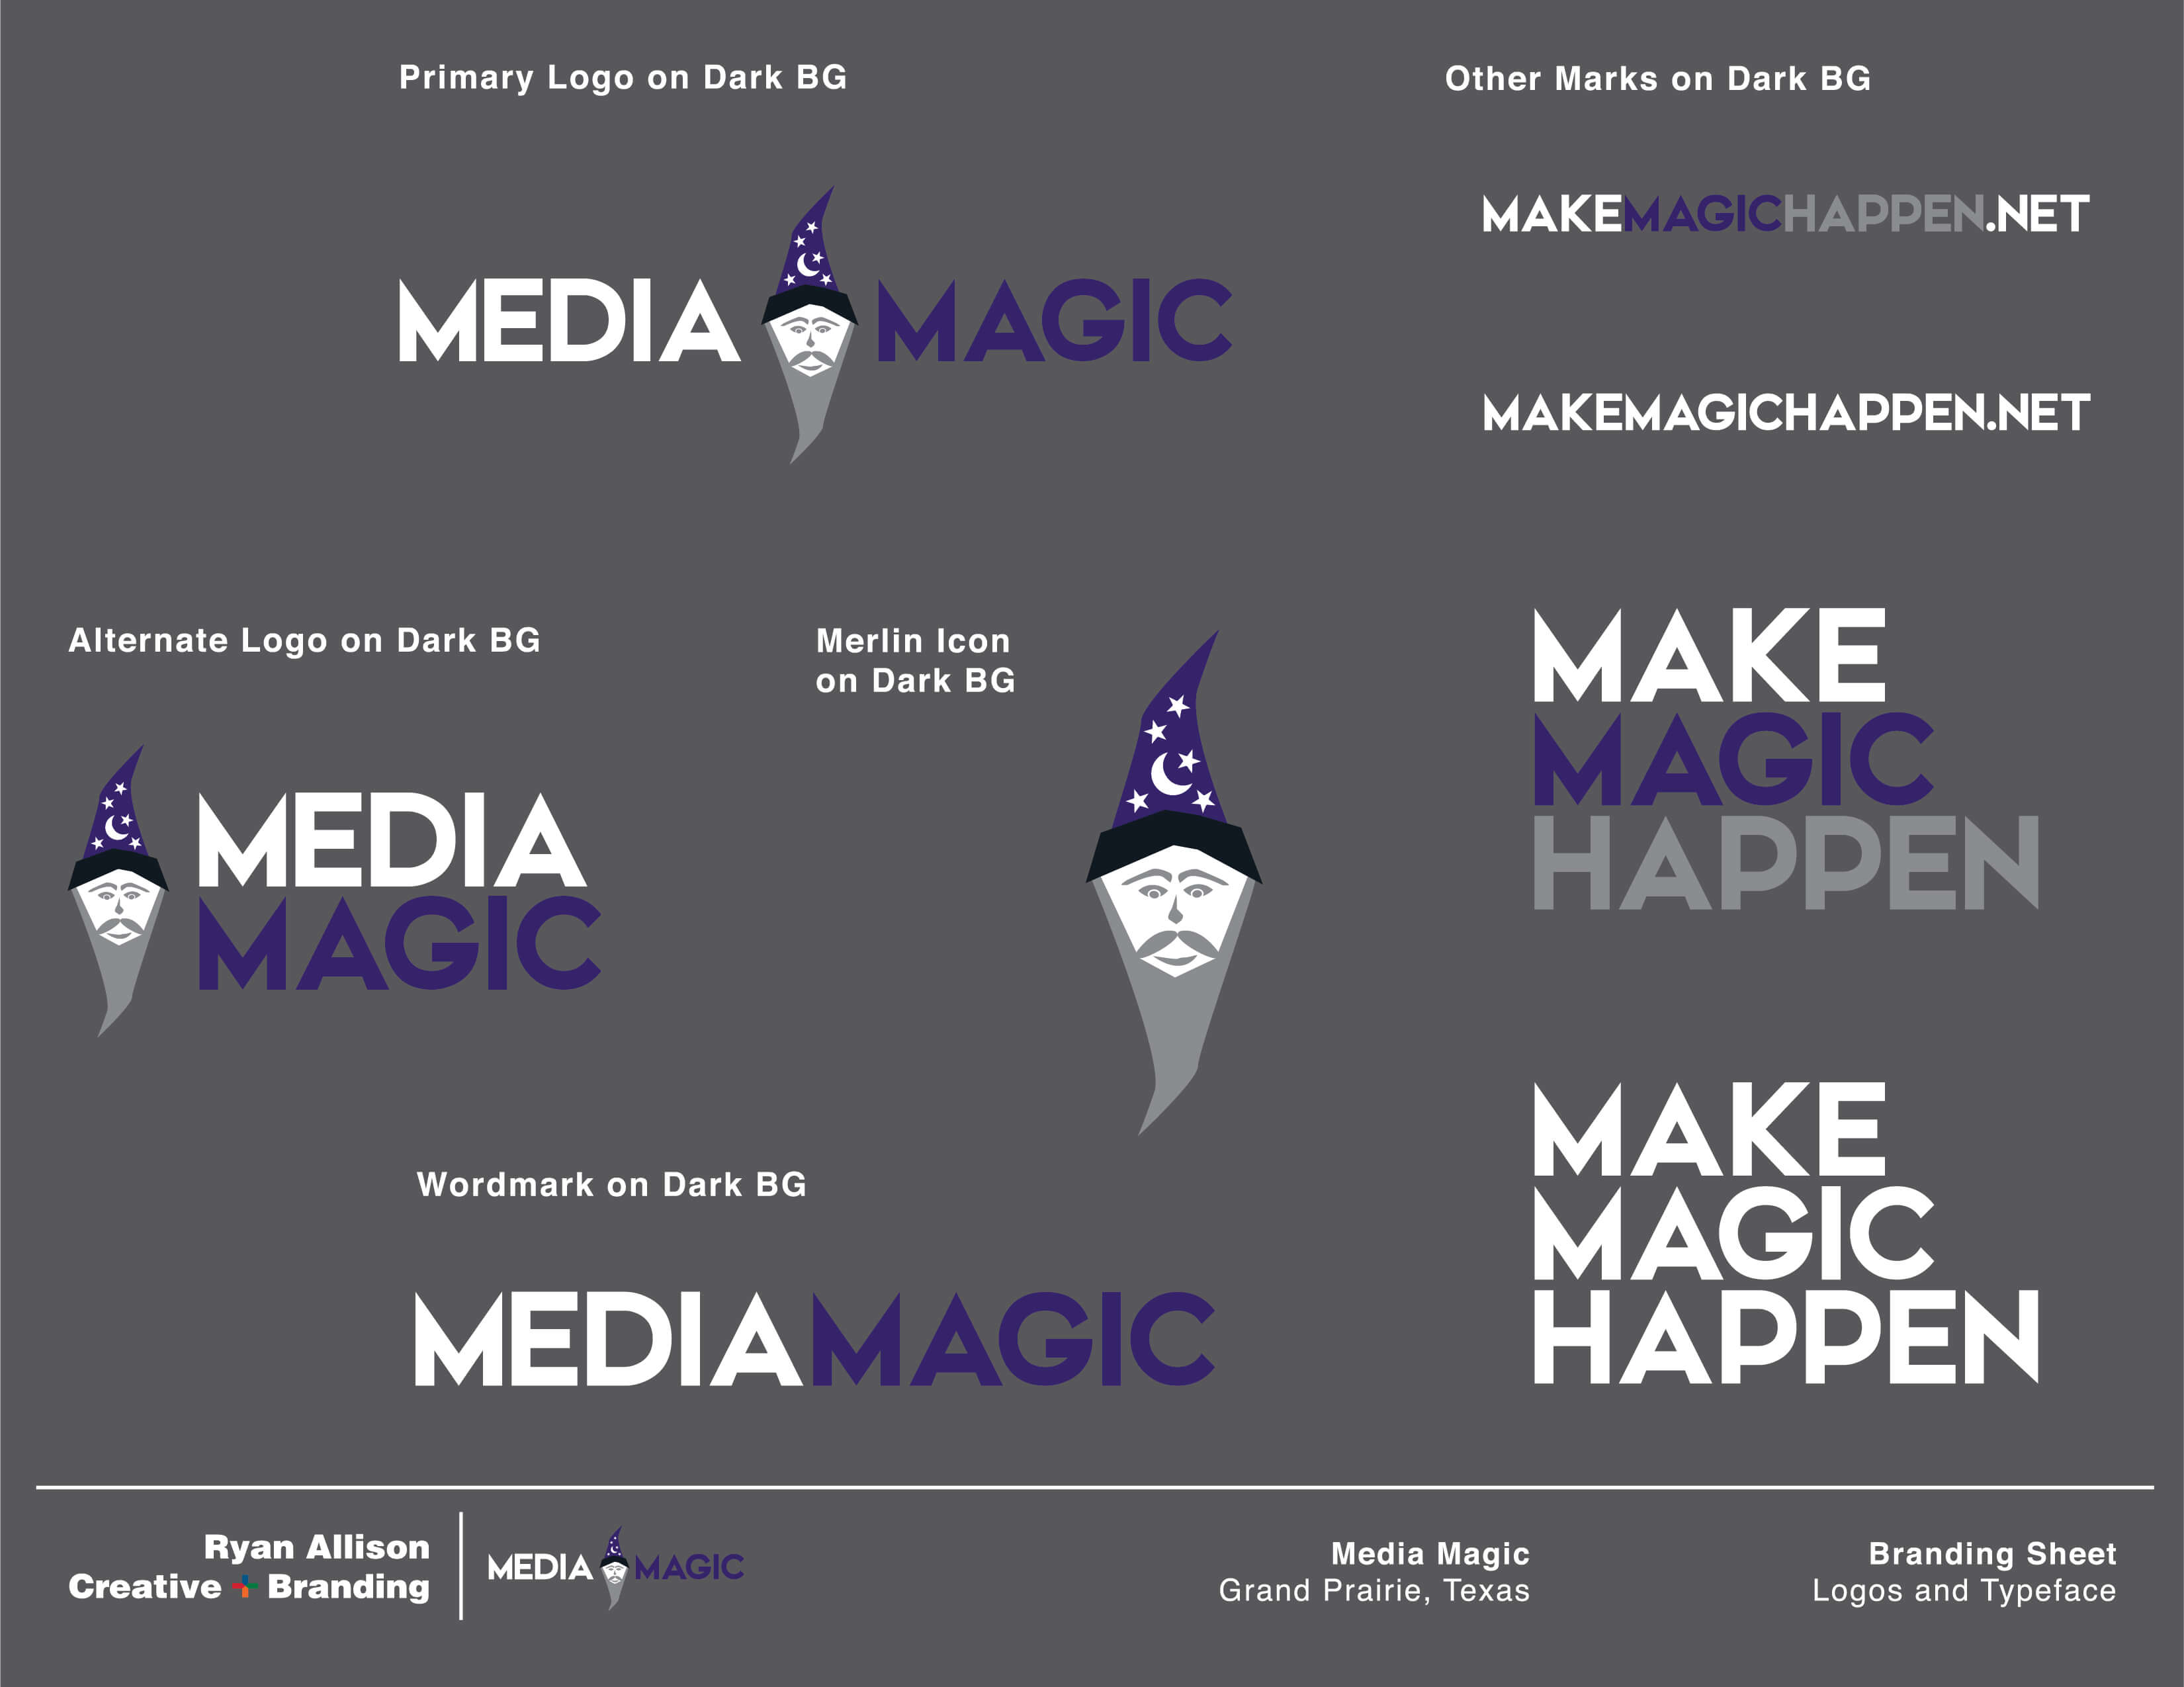 Media Magic - Branding Sheet Page 3 - Ryan Allison Creative + Branding